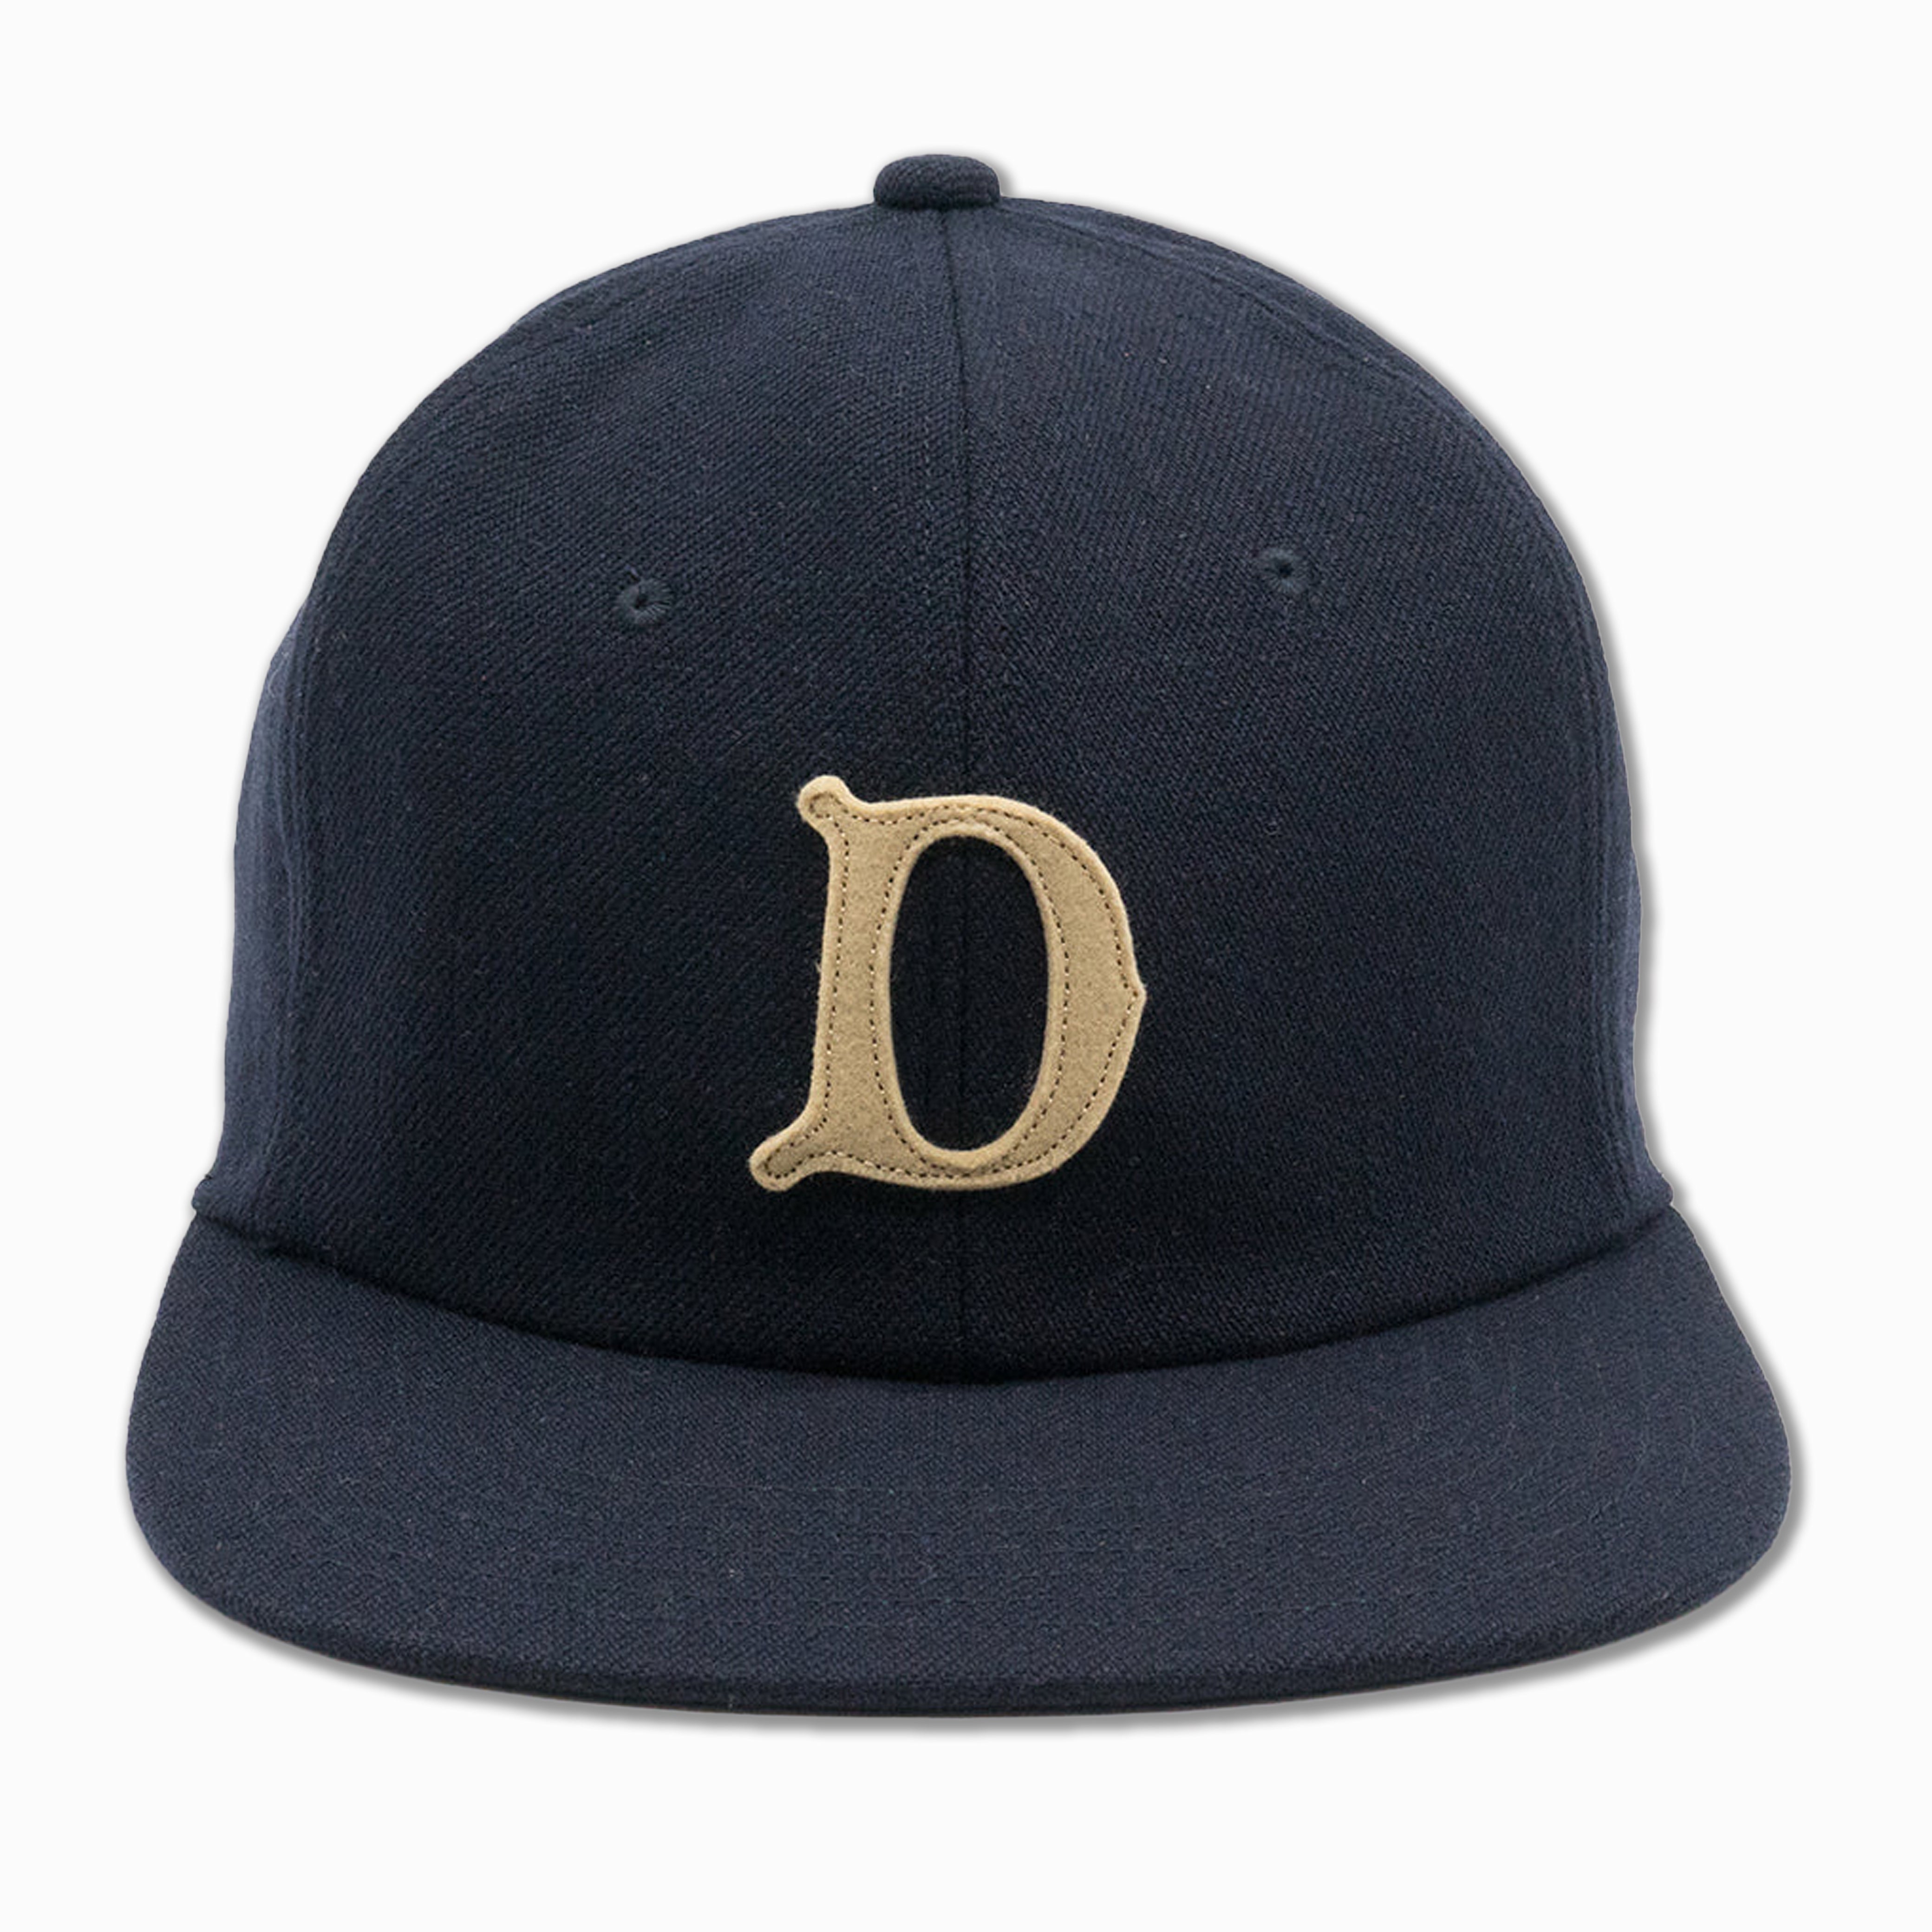 Baseball Cap in Navy Wool (D-00001)